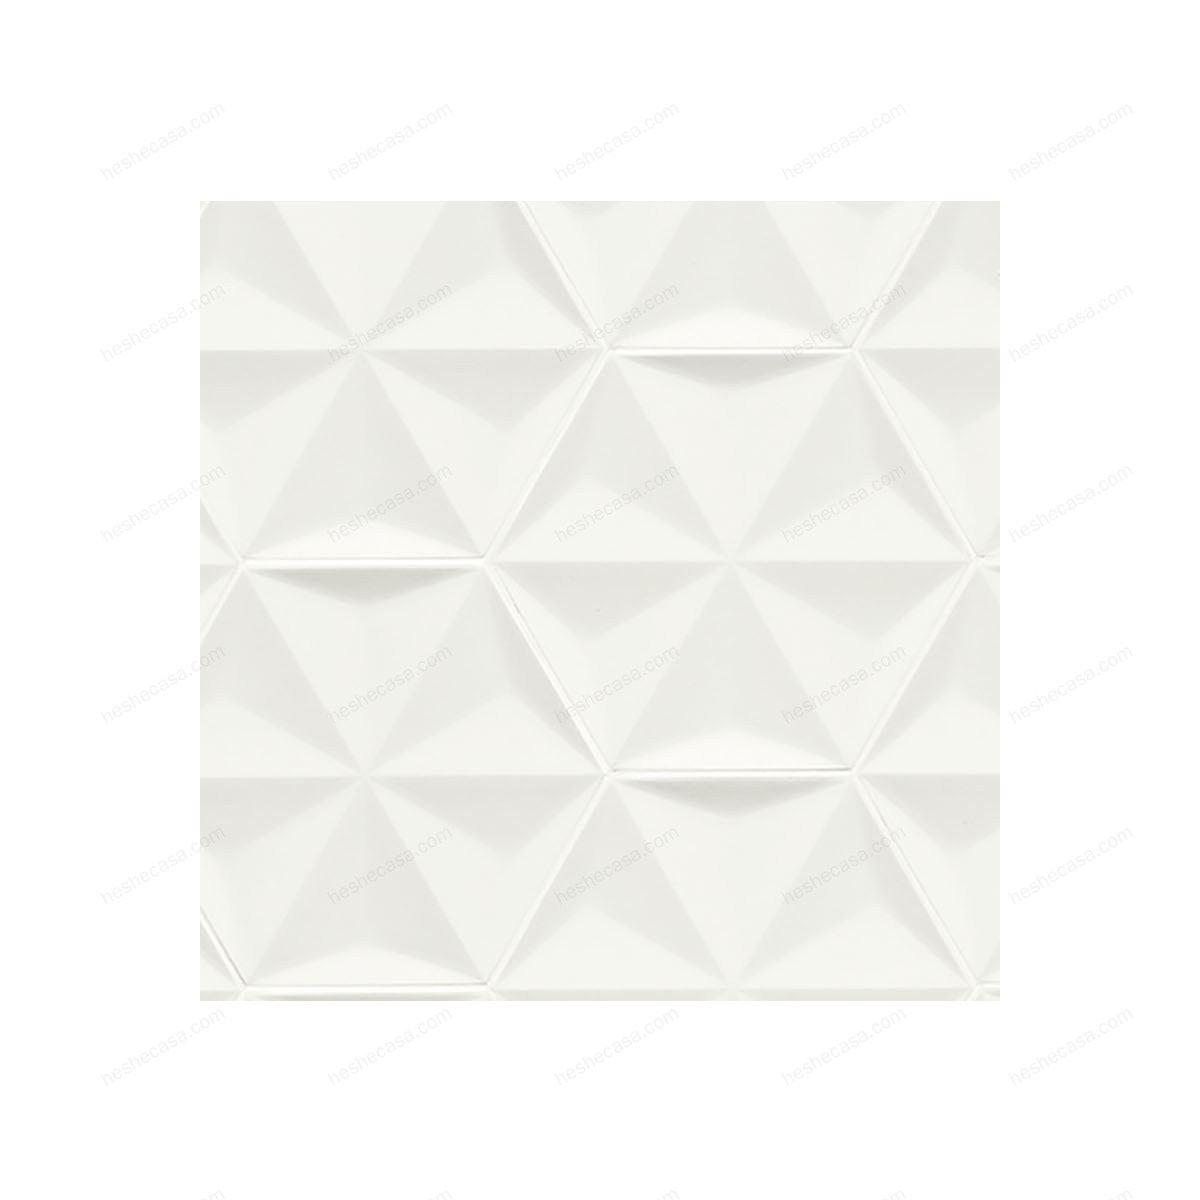 White Frozen Crystal瓷砖